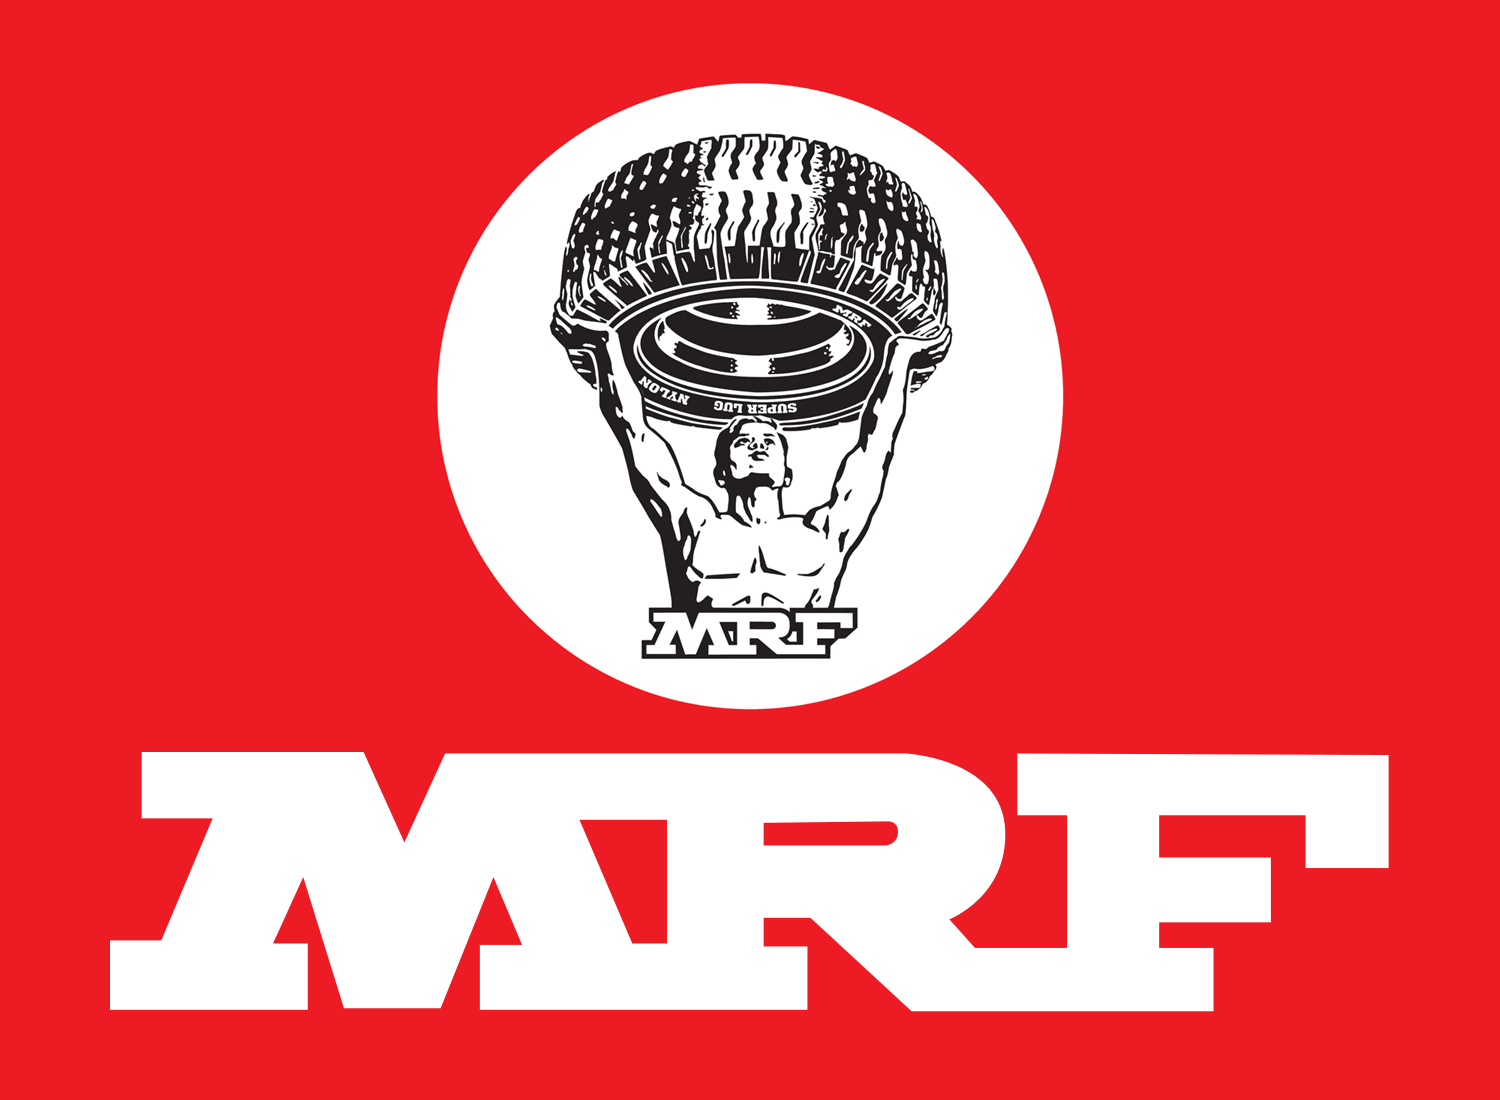 mrf-tyres-logo-1500x1100-1